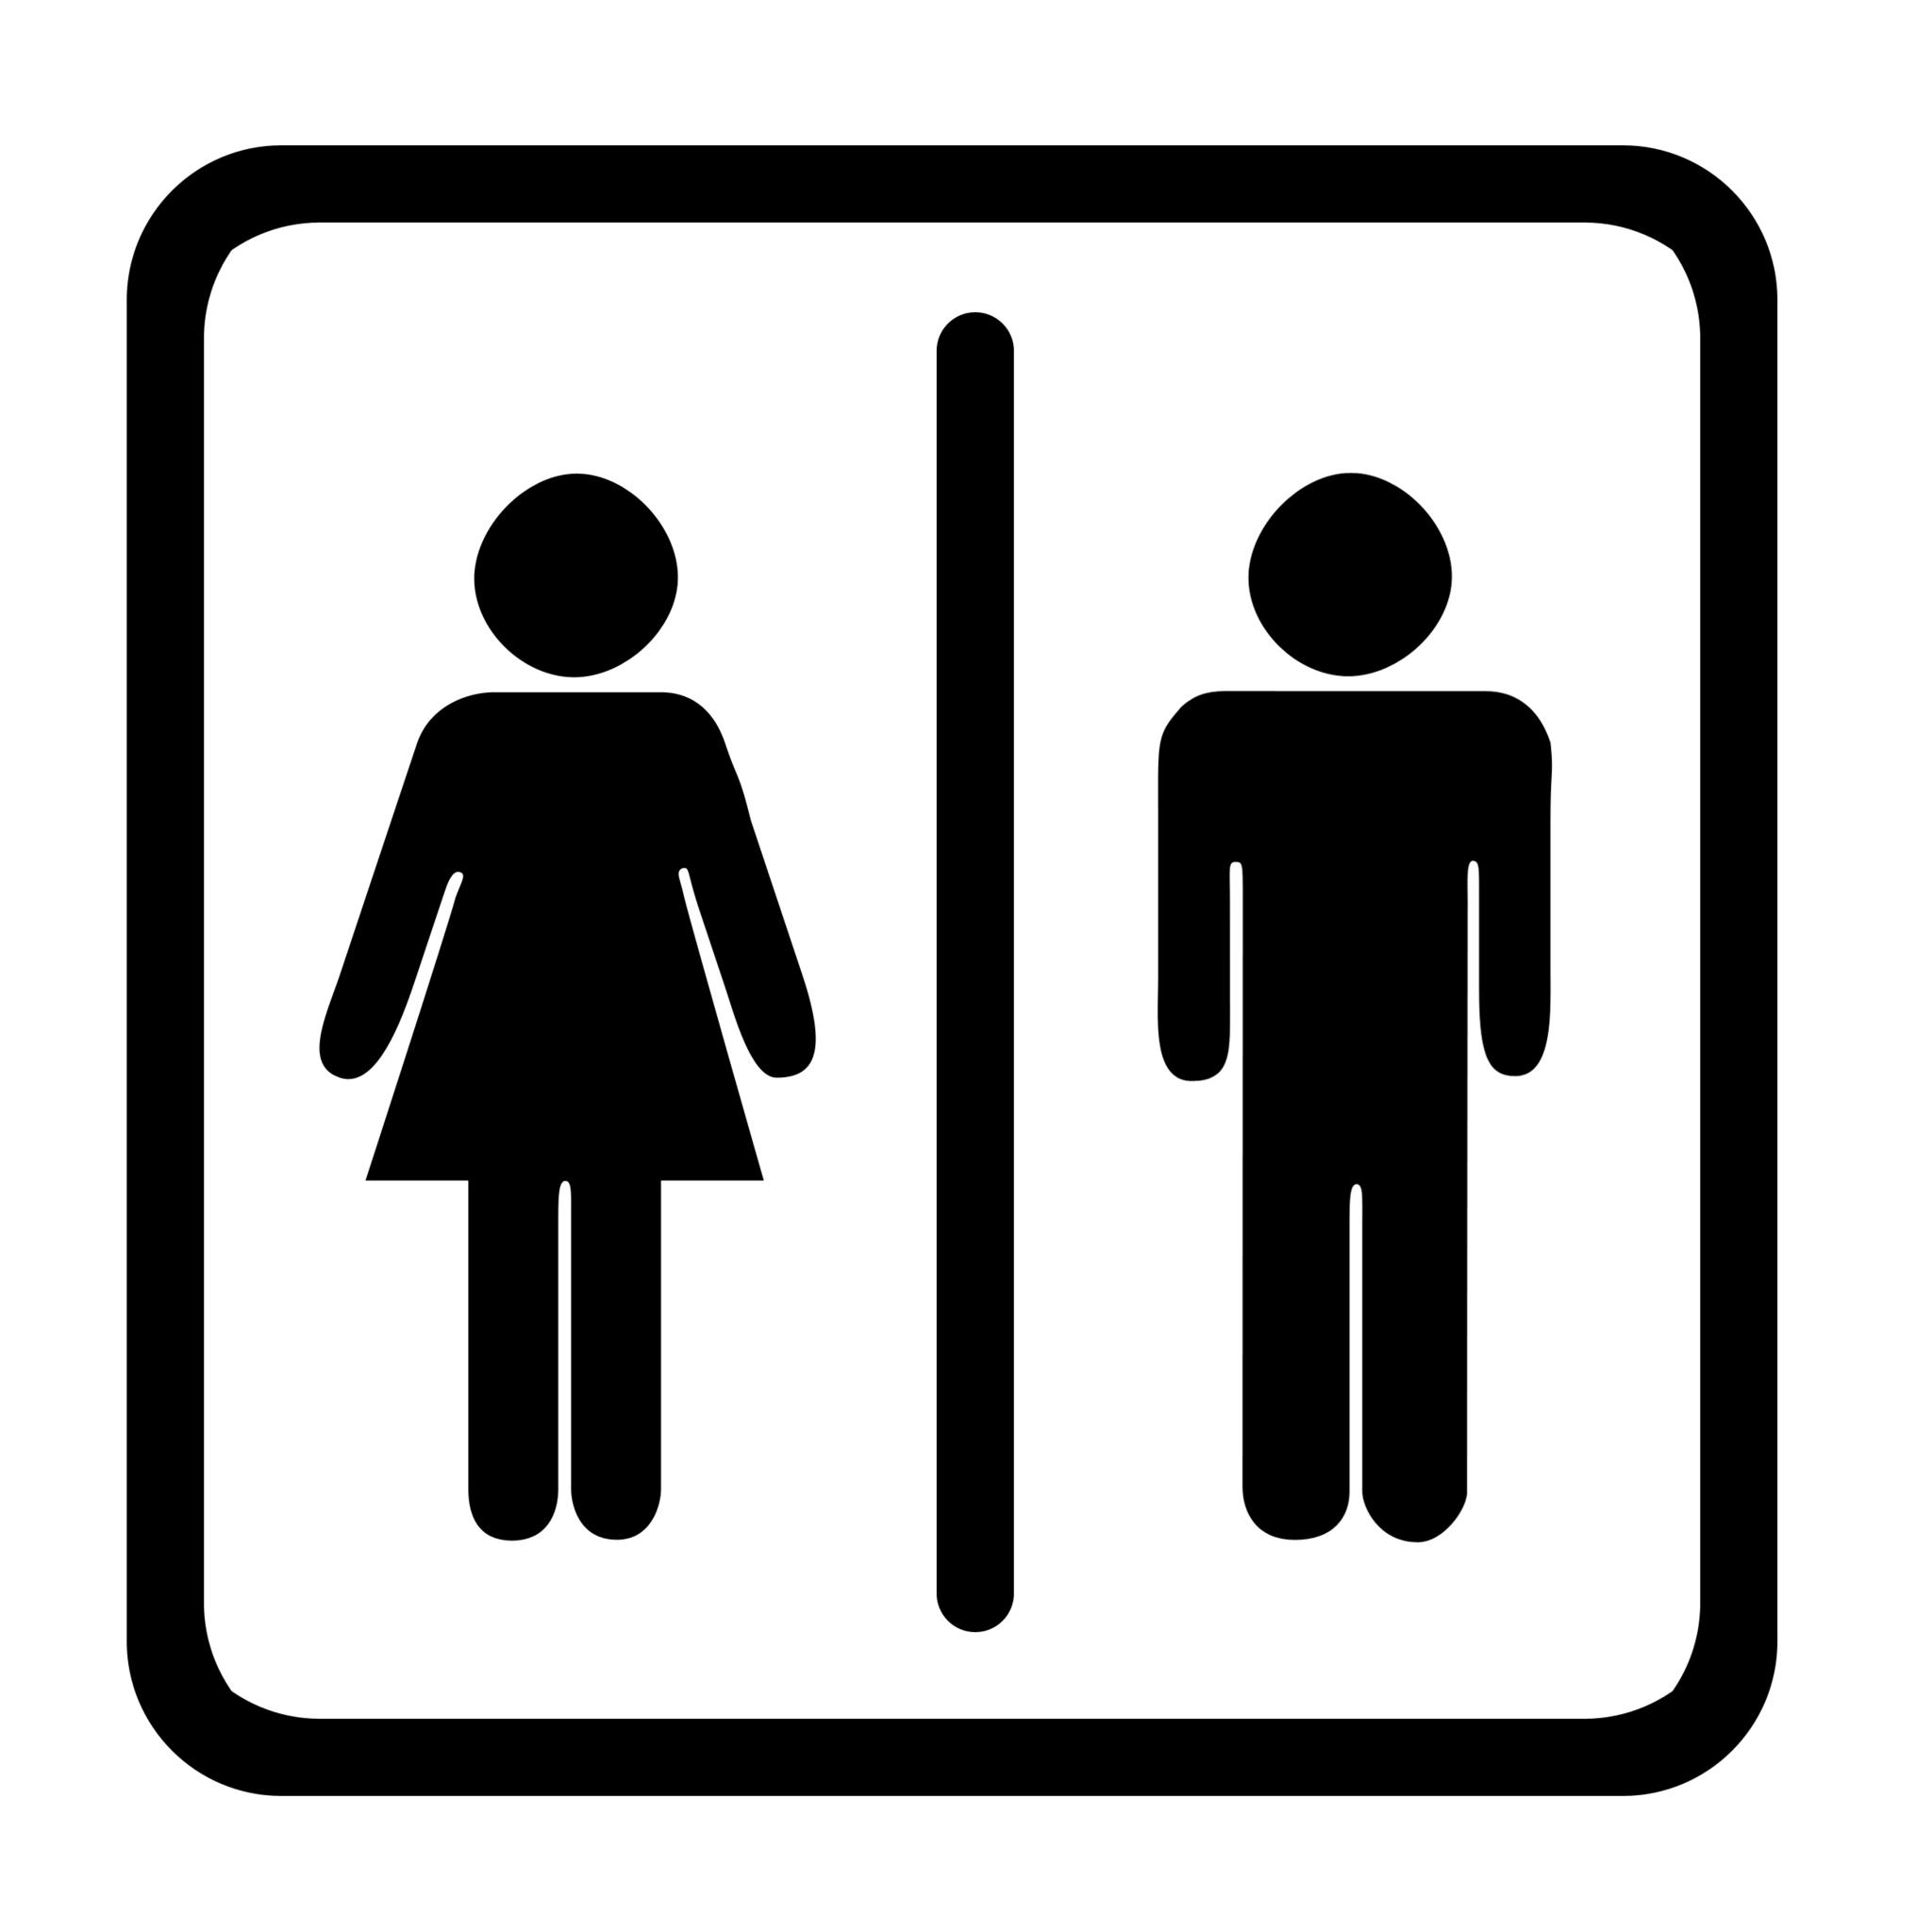 Women S And Men S Toilets Sign Black On White